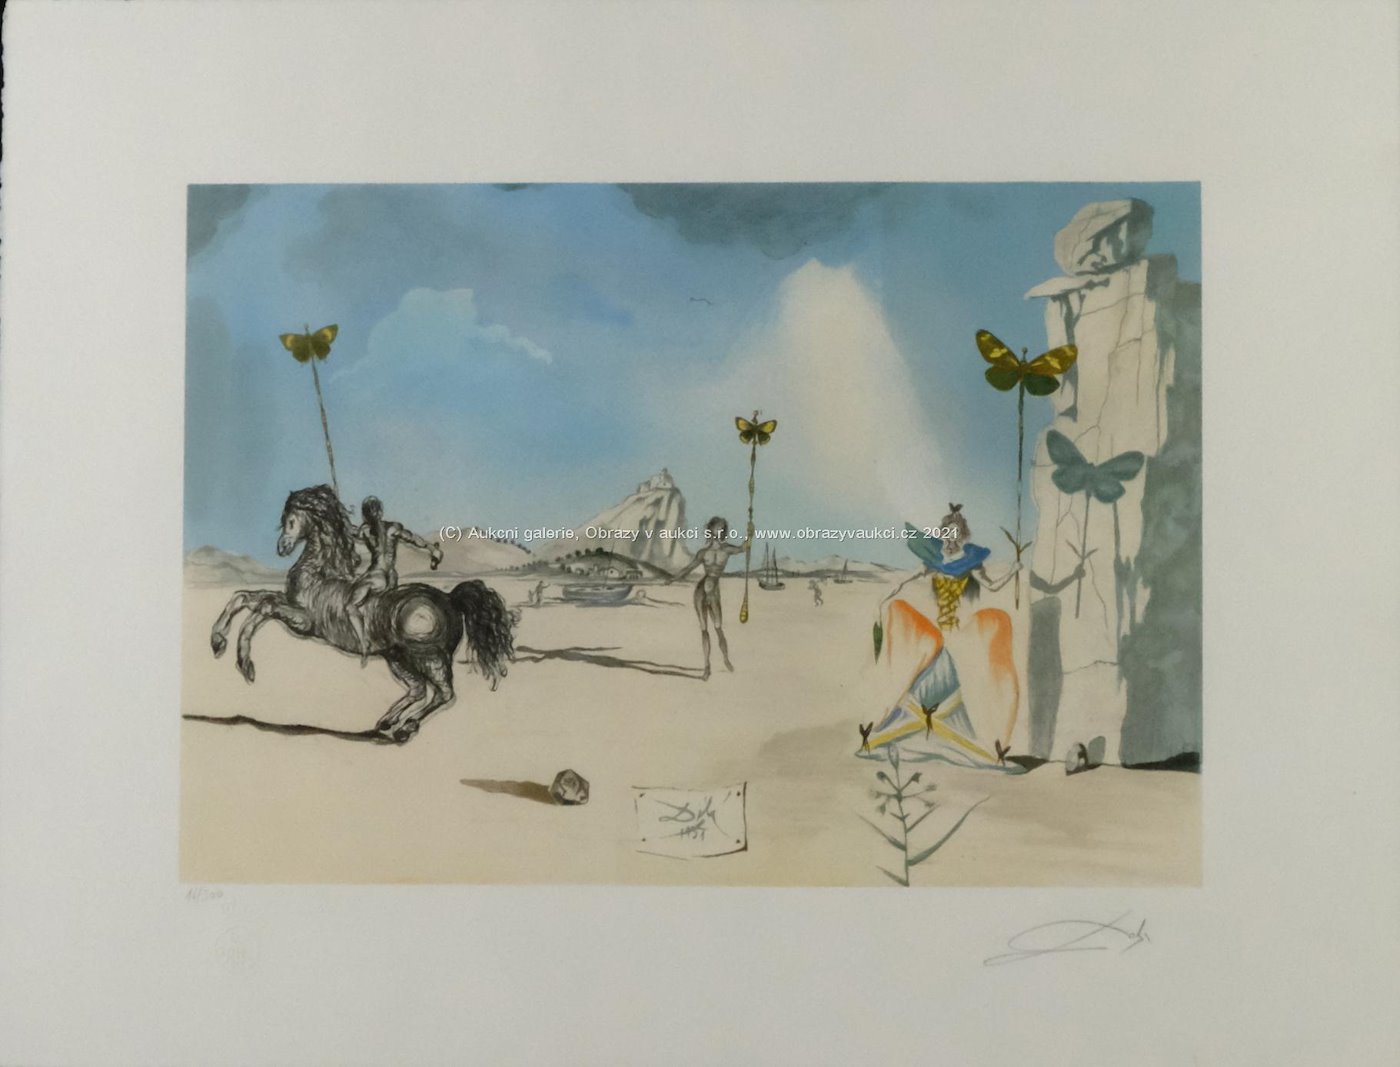 Salvador Dalí - Landscape with Cavalier and Gala